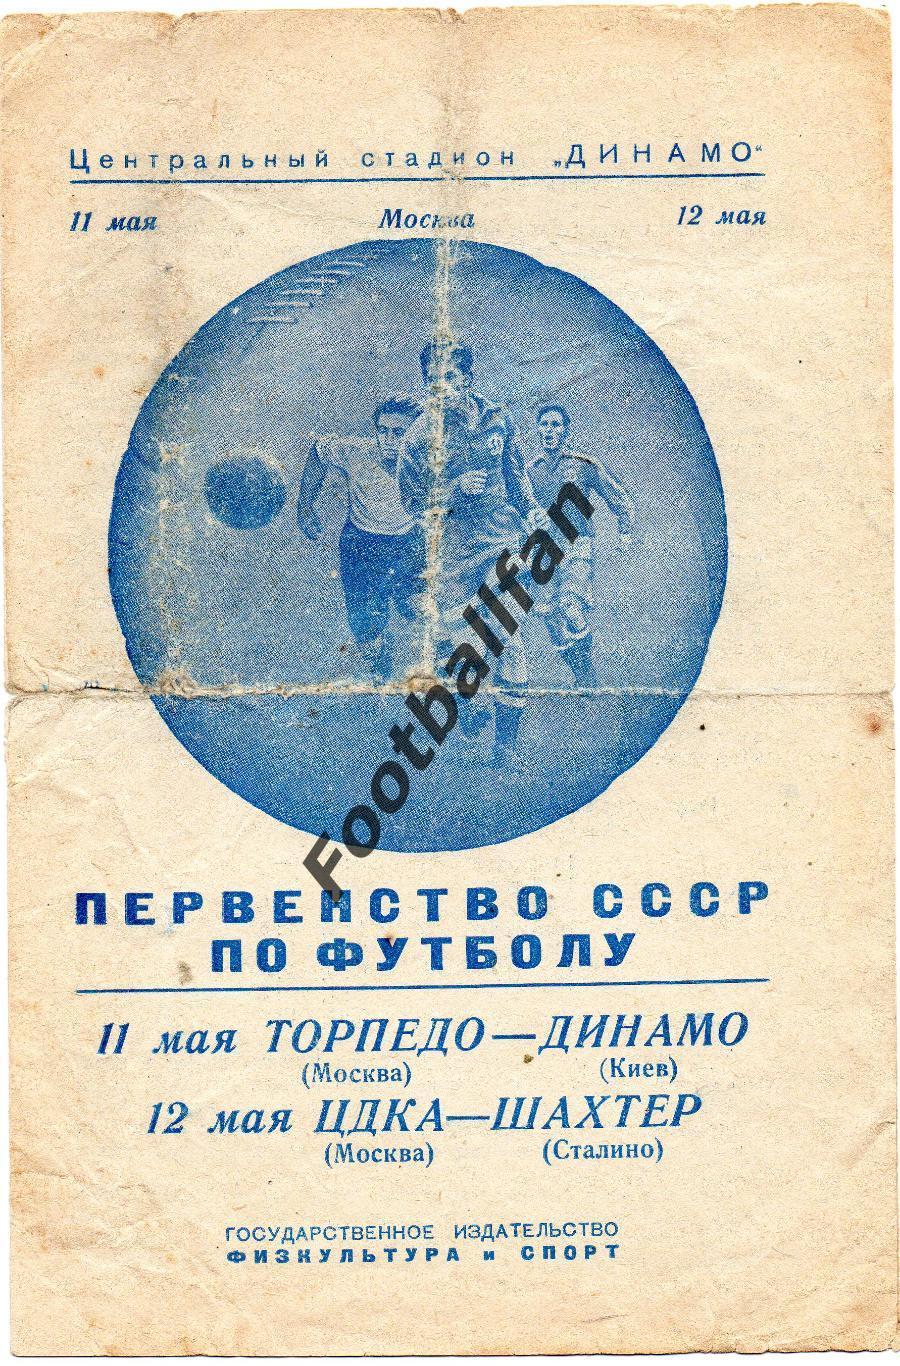 Торпедо Москва - Динамо Киев 11.05 + ЦДКА Москва - Шахтер Сталино 12.05.1950